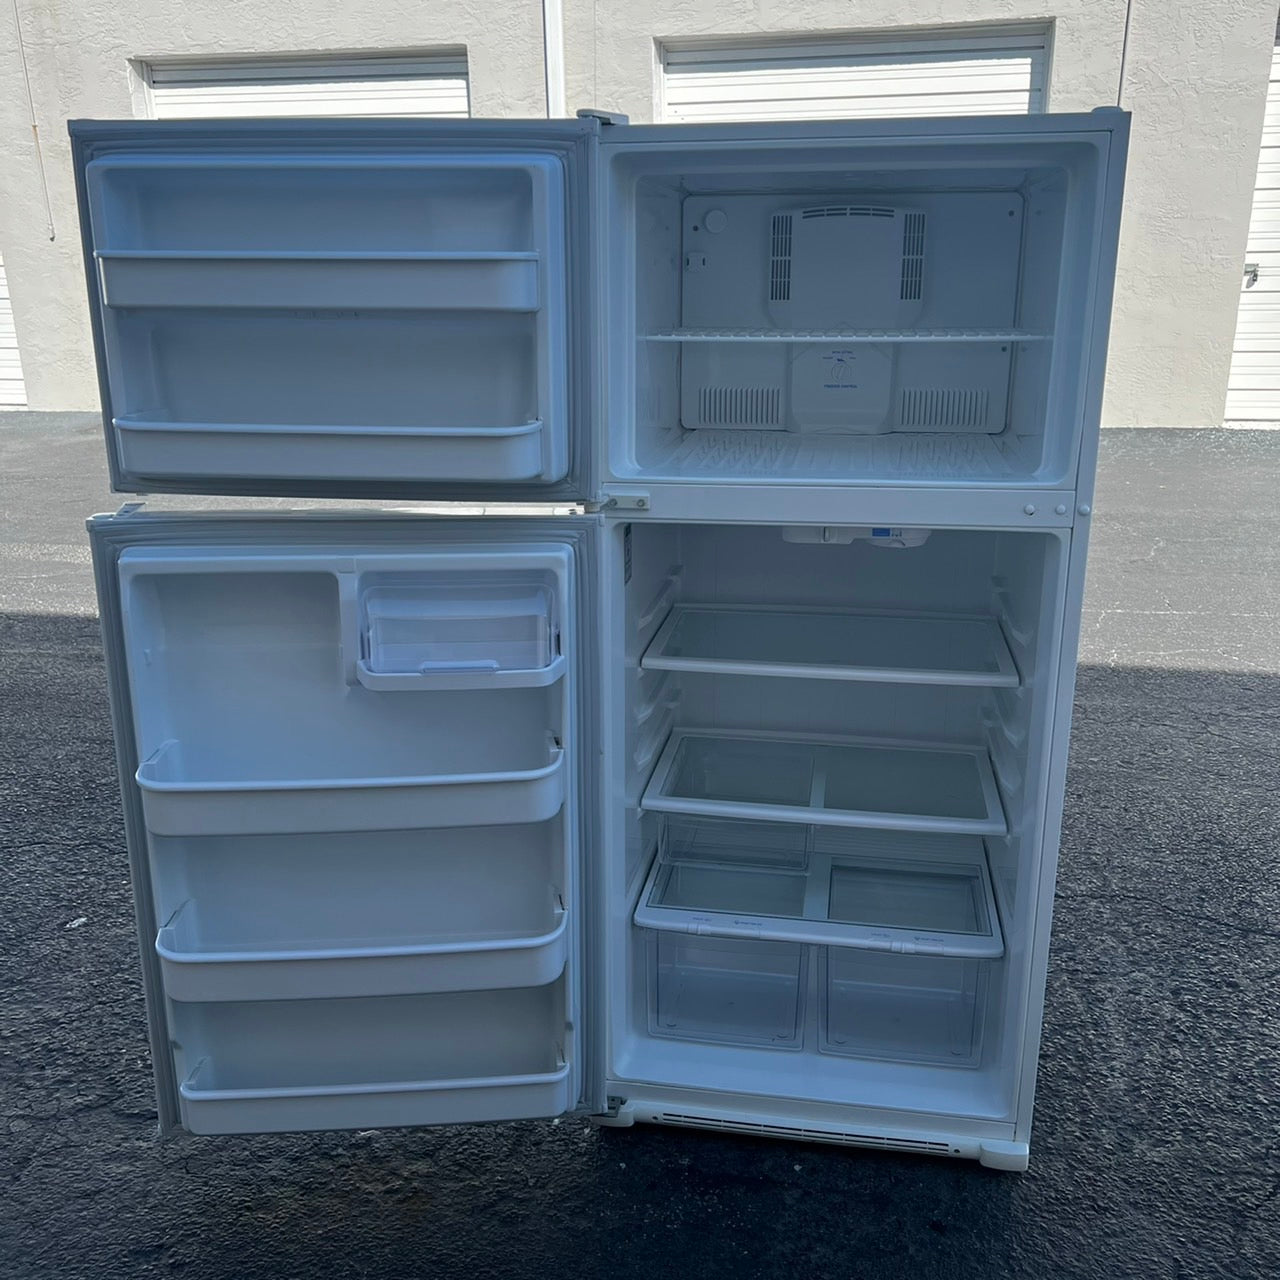 Daewoo Top and Bottom Refrigerator